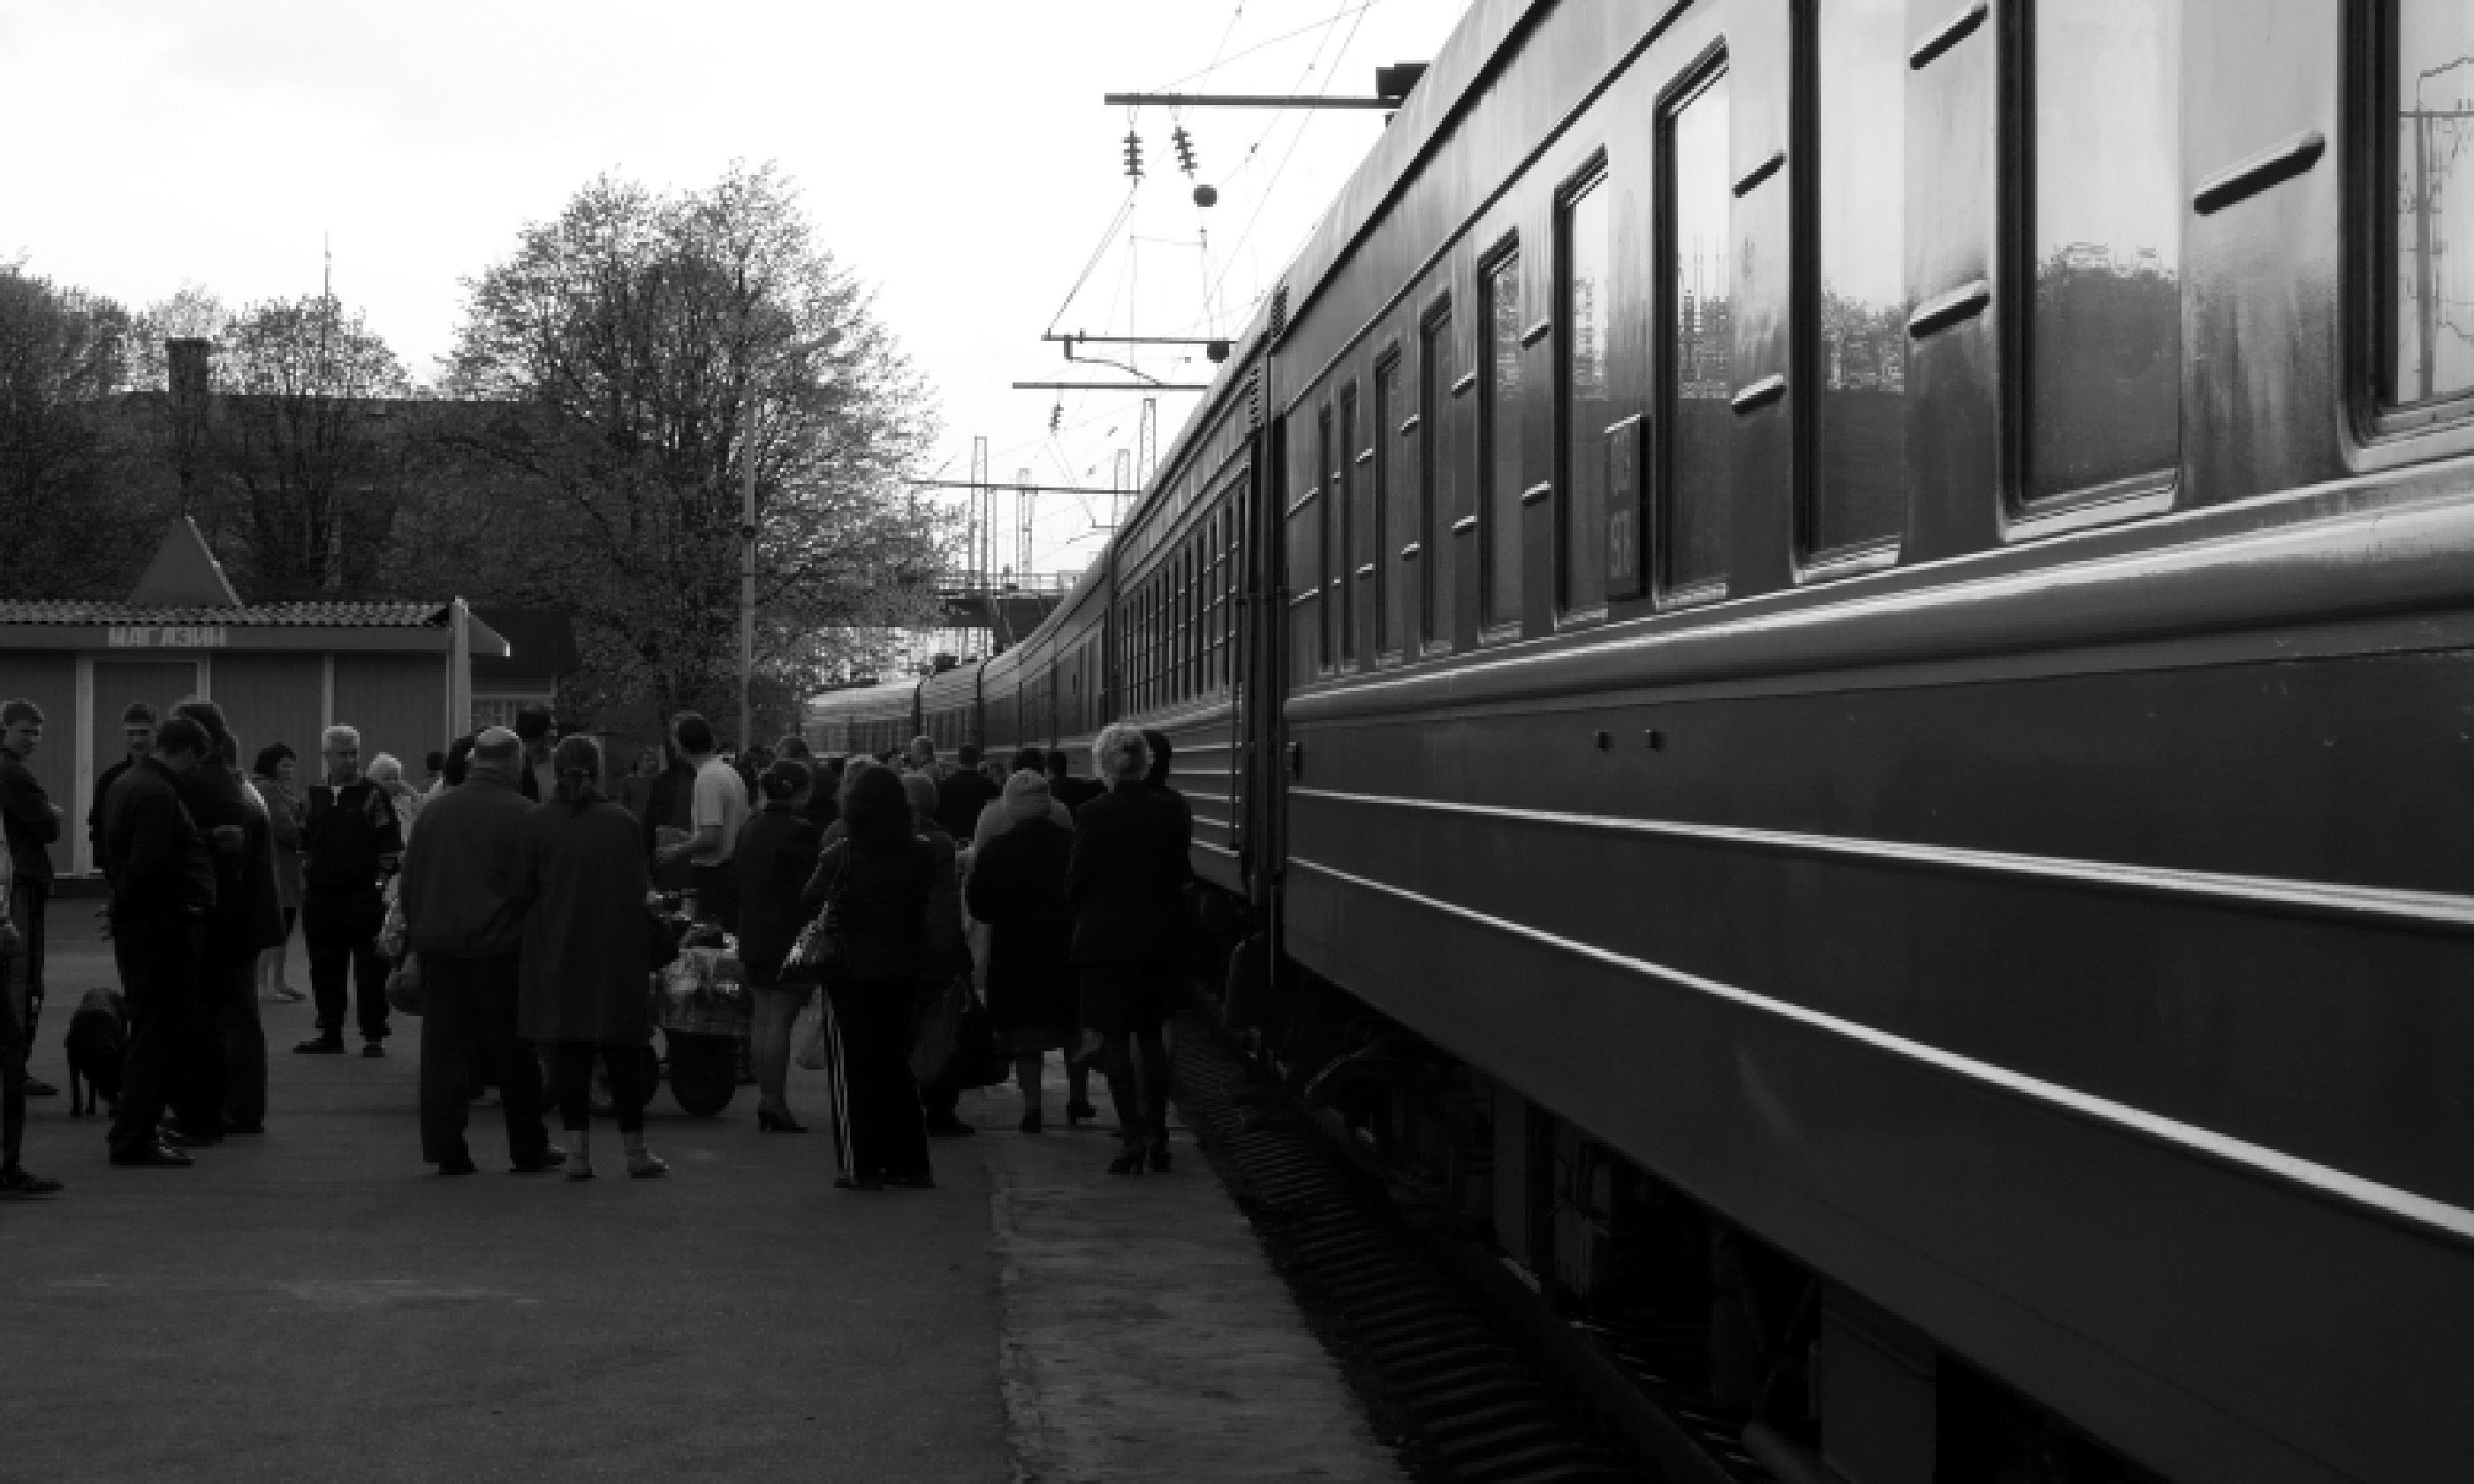 The train to Karelia (Luke Darracott)